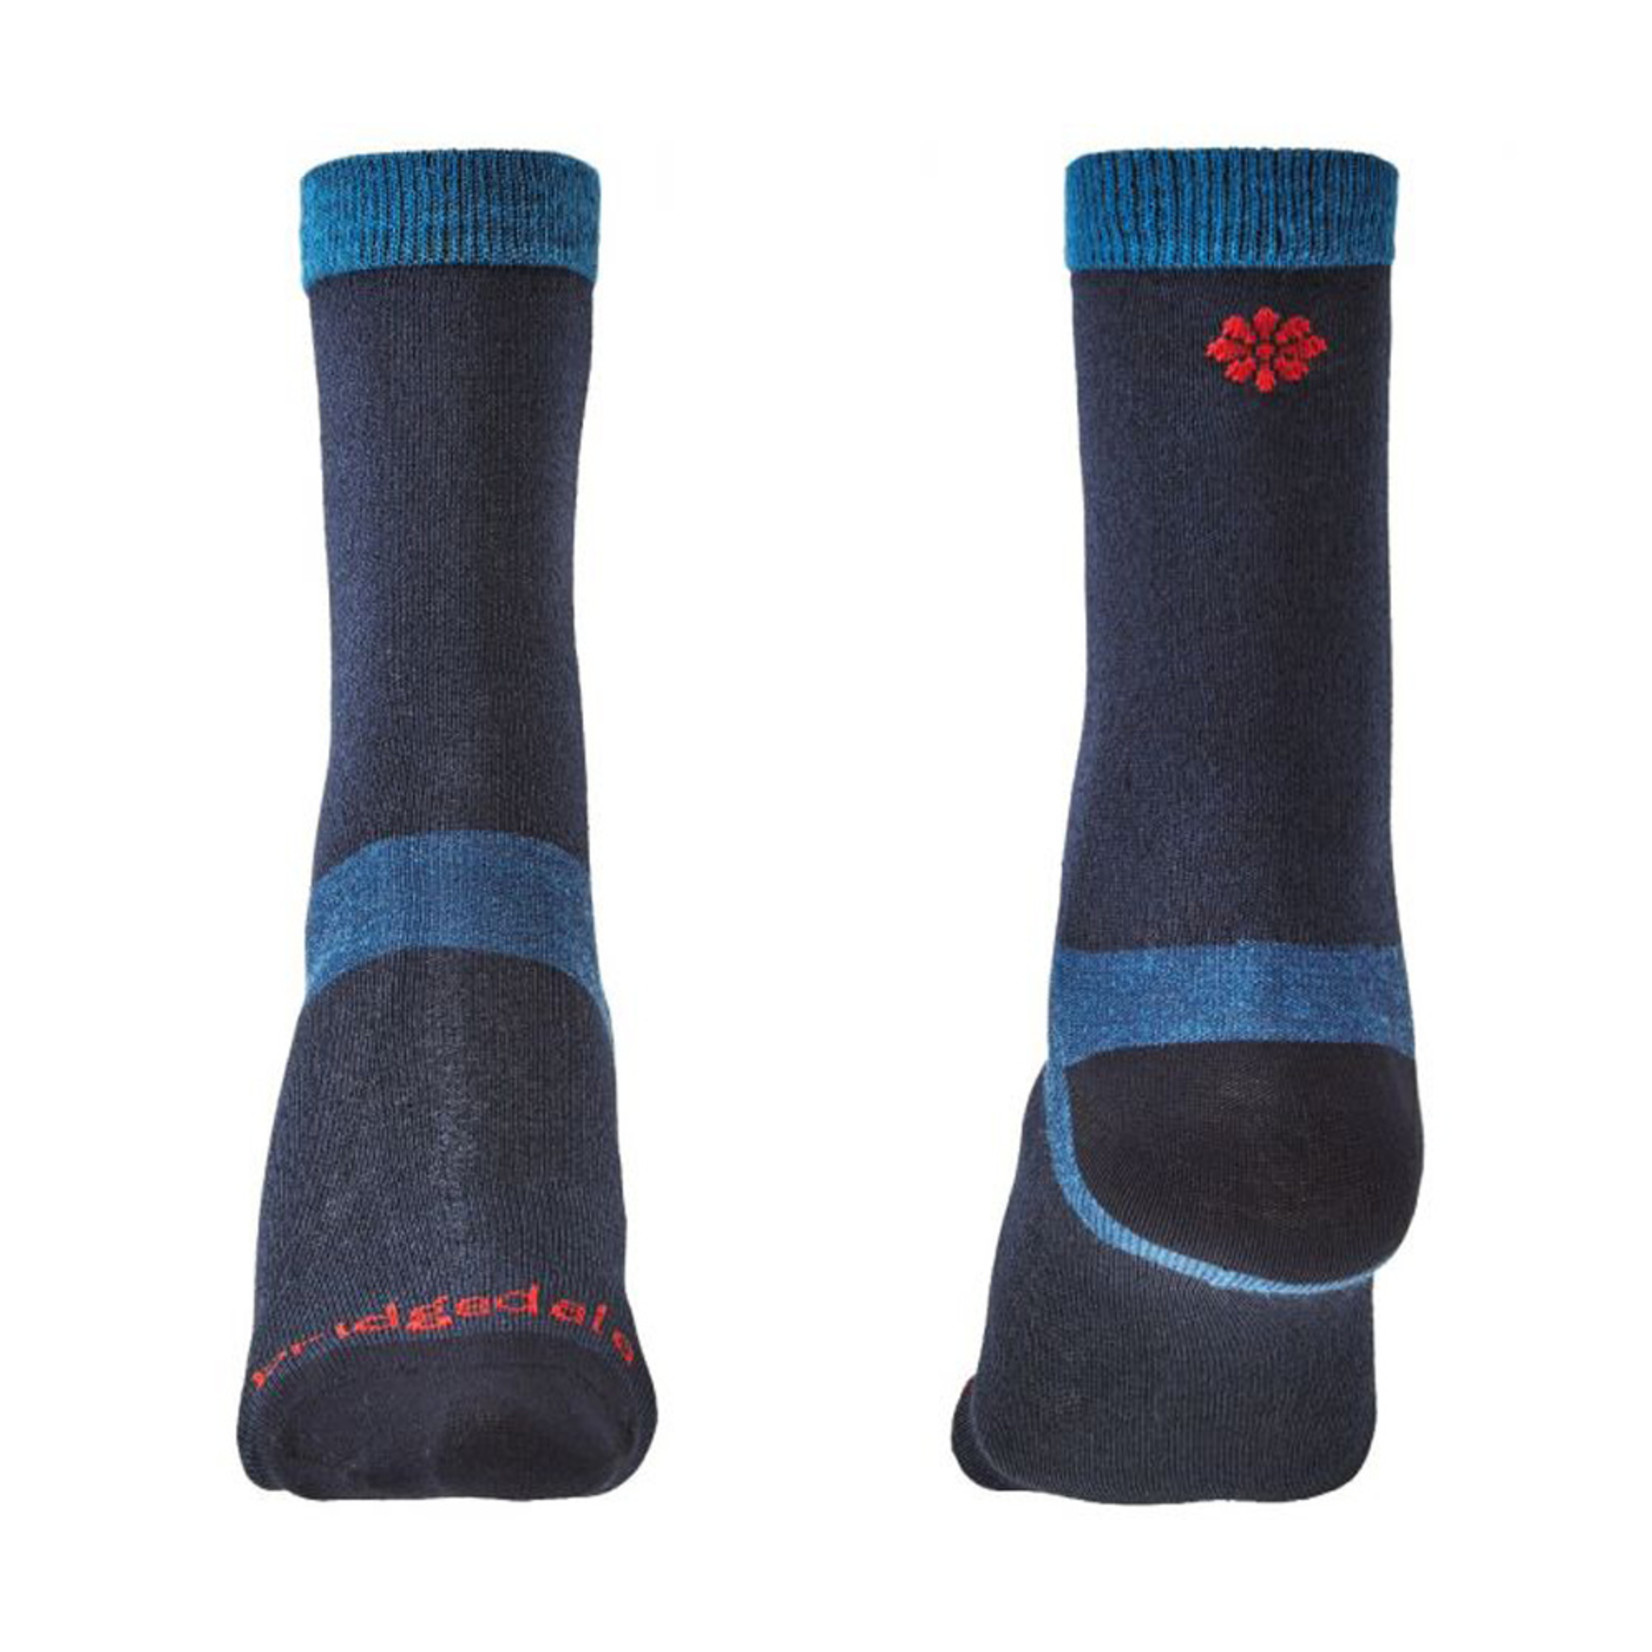 Bridgedale Coolmax Liner Socks Women Blue